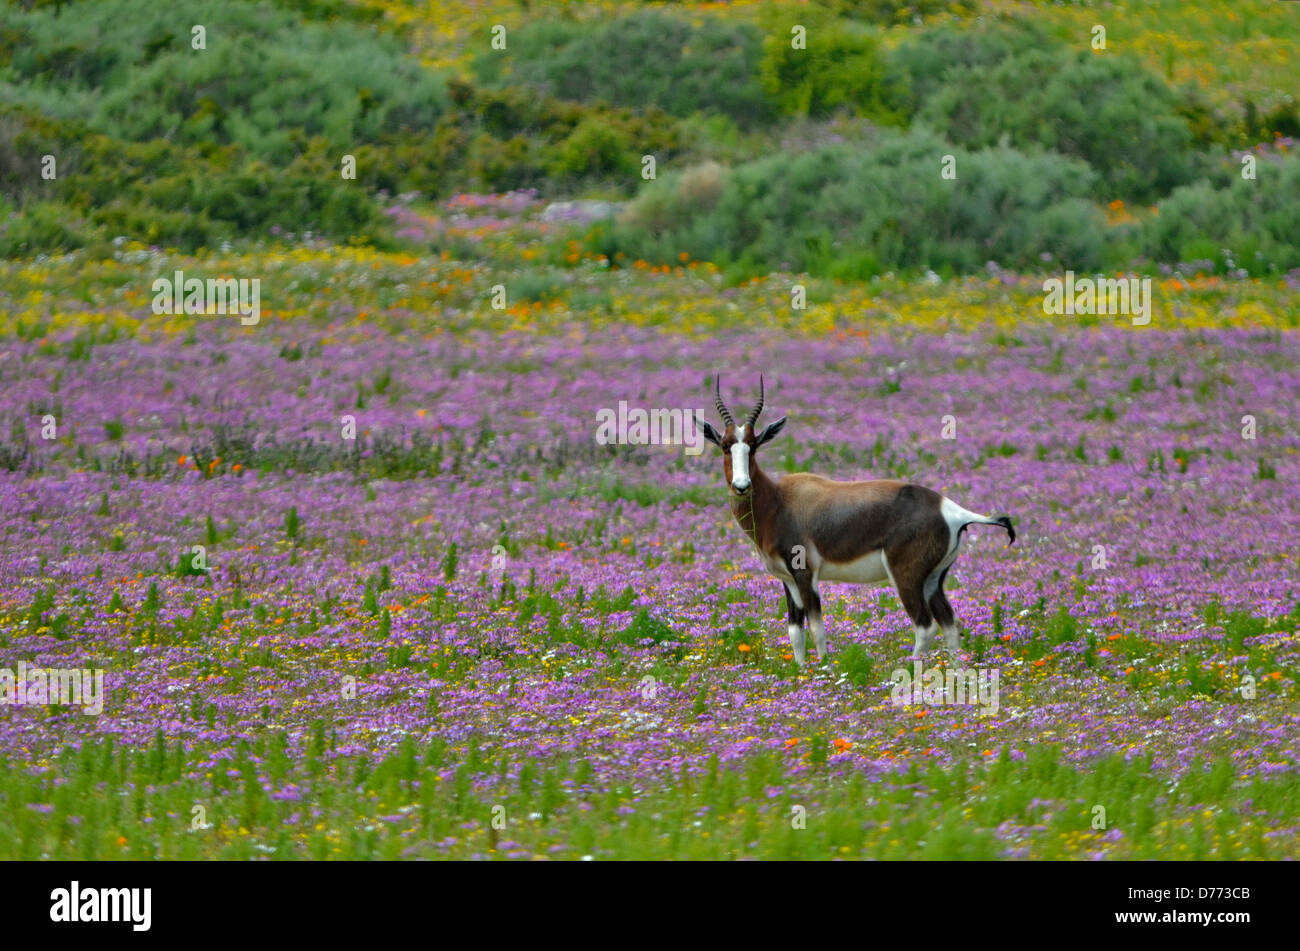 Africa South Africa West Coast national park bontebok antelope (Damaliscus pygargus  in flower fields Stock Photo